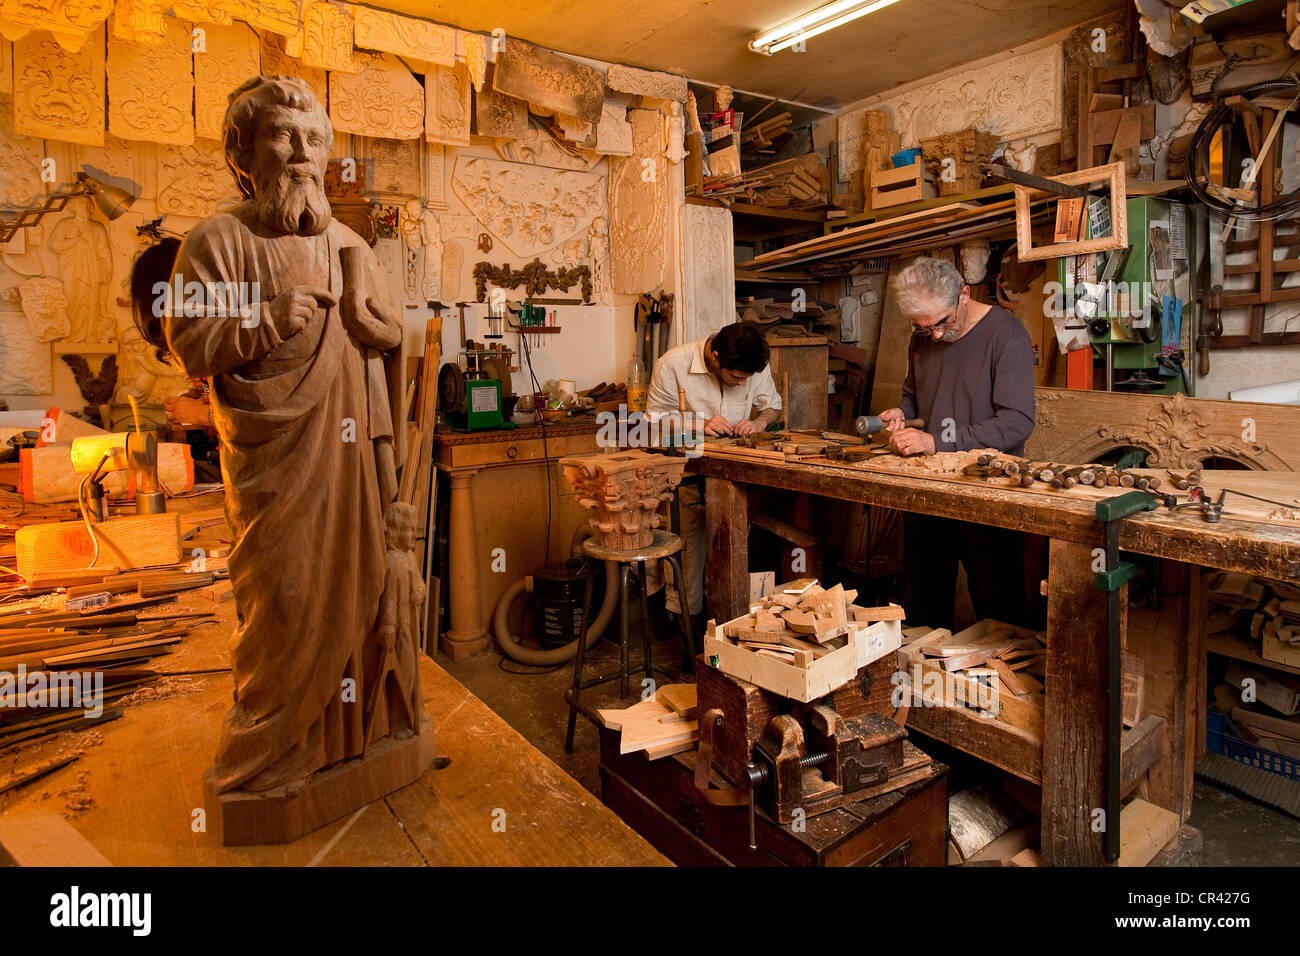 Francia, París, Vincent Mouchez, madera escultor artesano Foto de stock